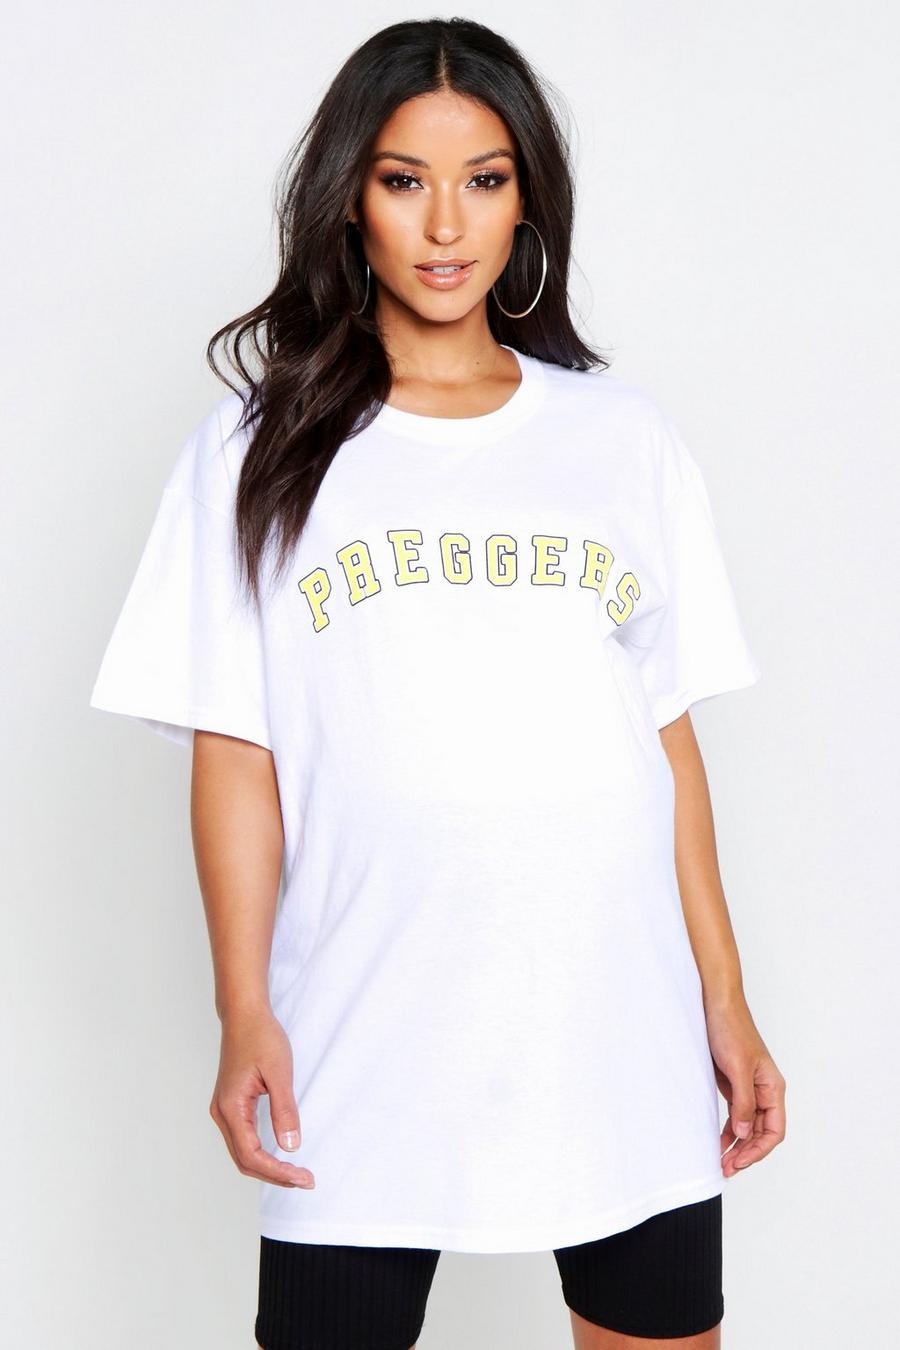 Camiseta con eslogan "Preggers" premamá image number 1